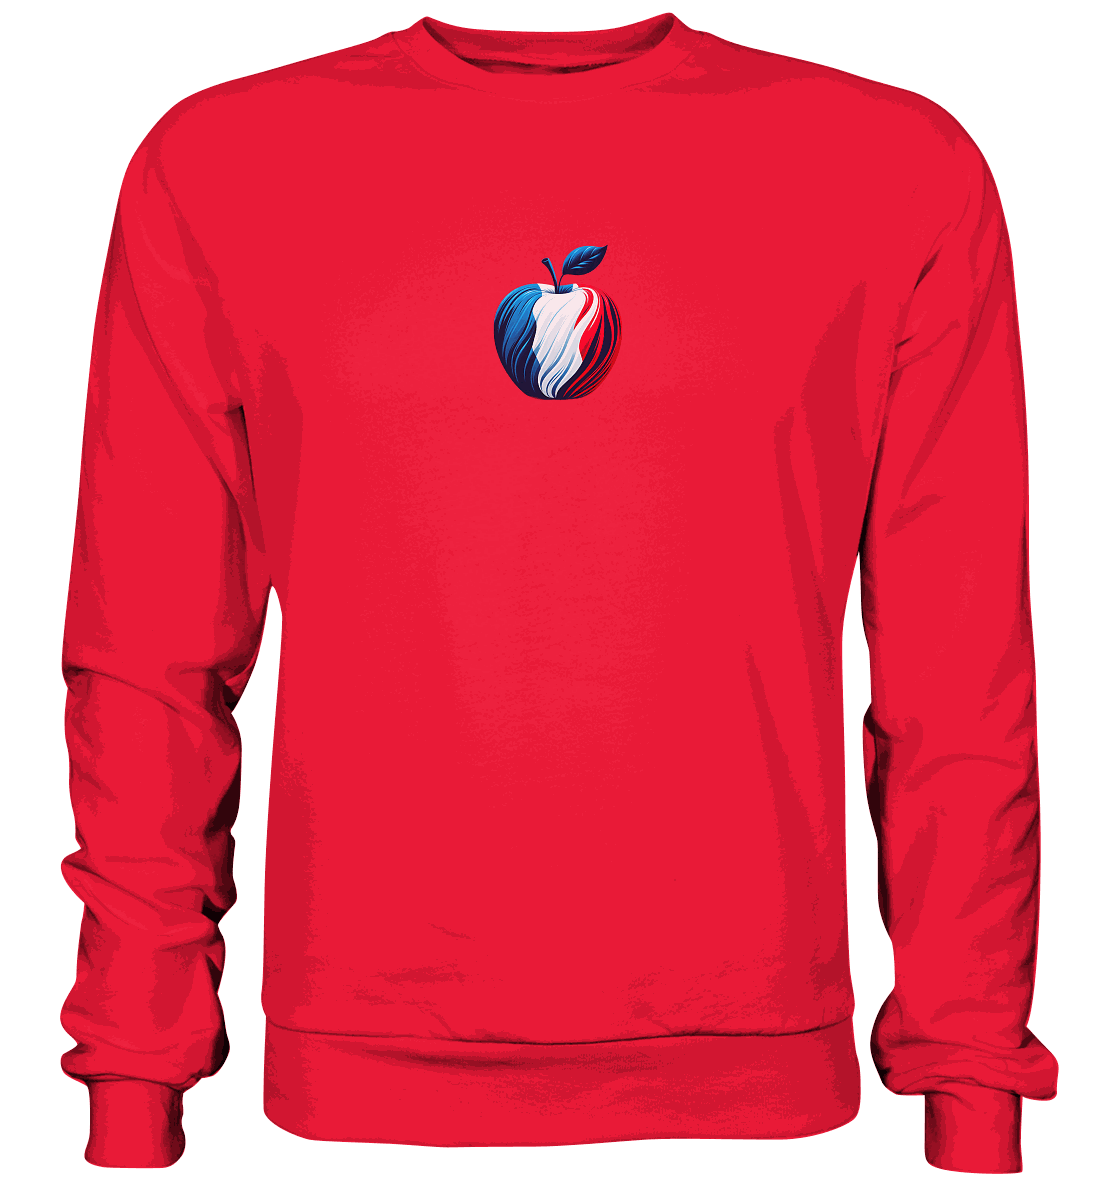 Fußball EM France Apfel - Premium Sweatshirt